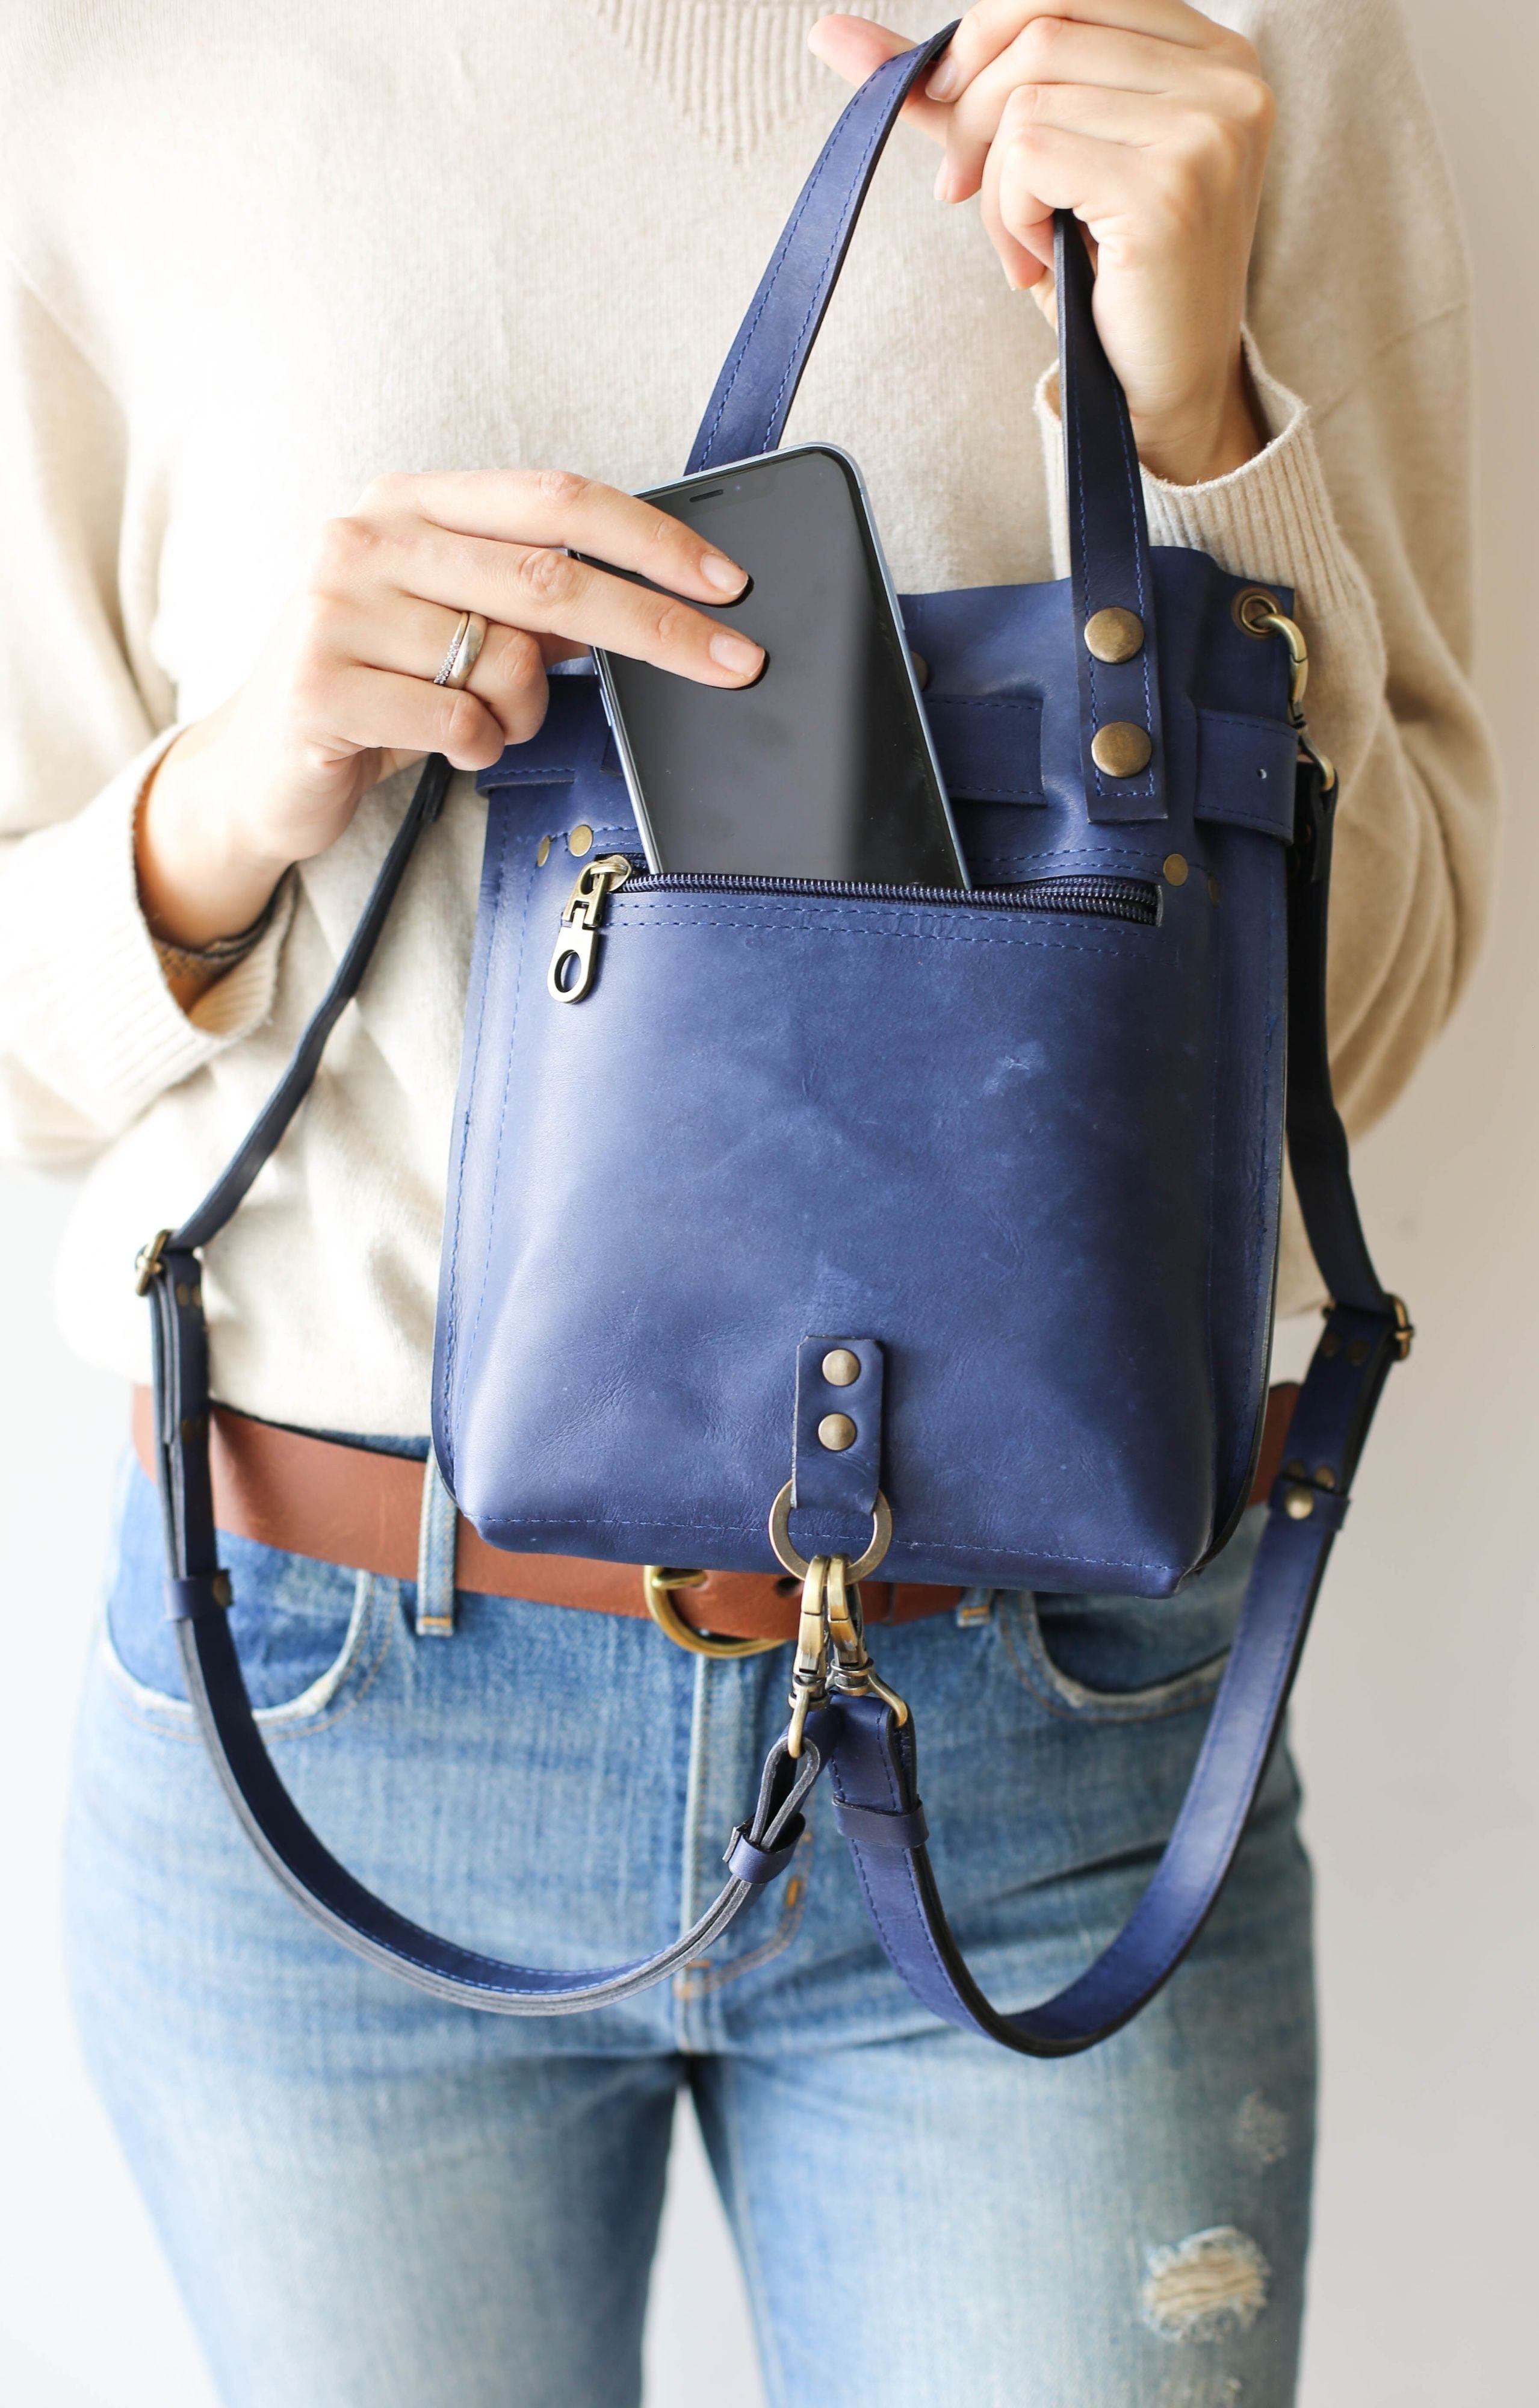 Hidesign East India Leather Shoulder Handbag Purse Dark Navy Blue | eBay